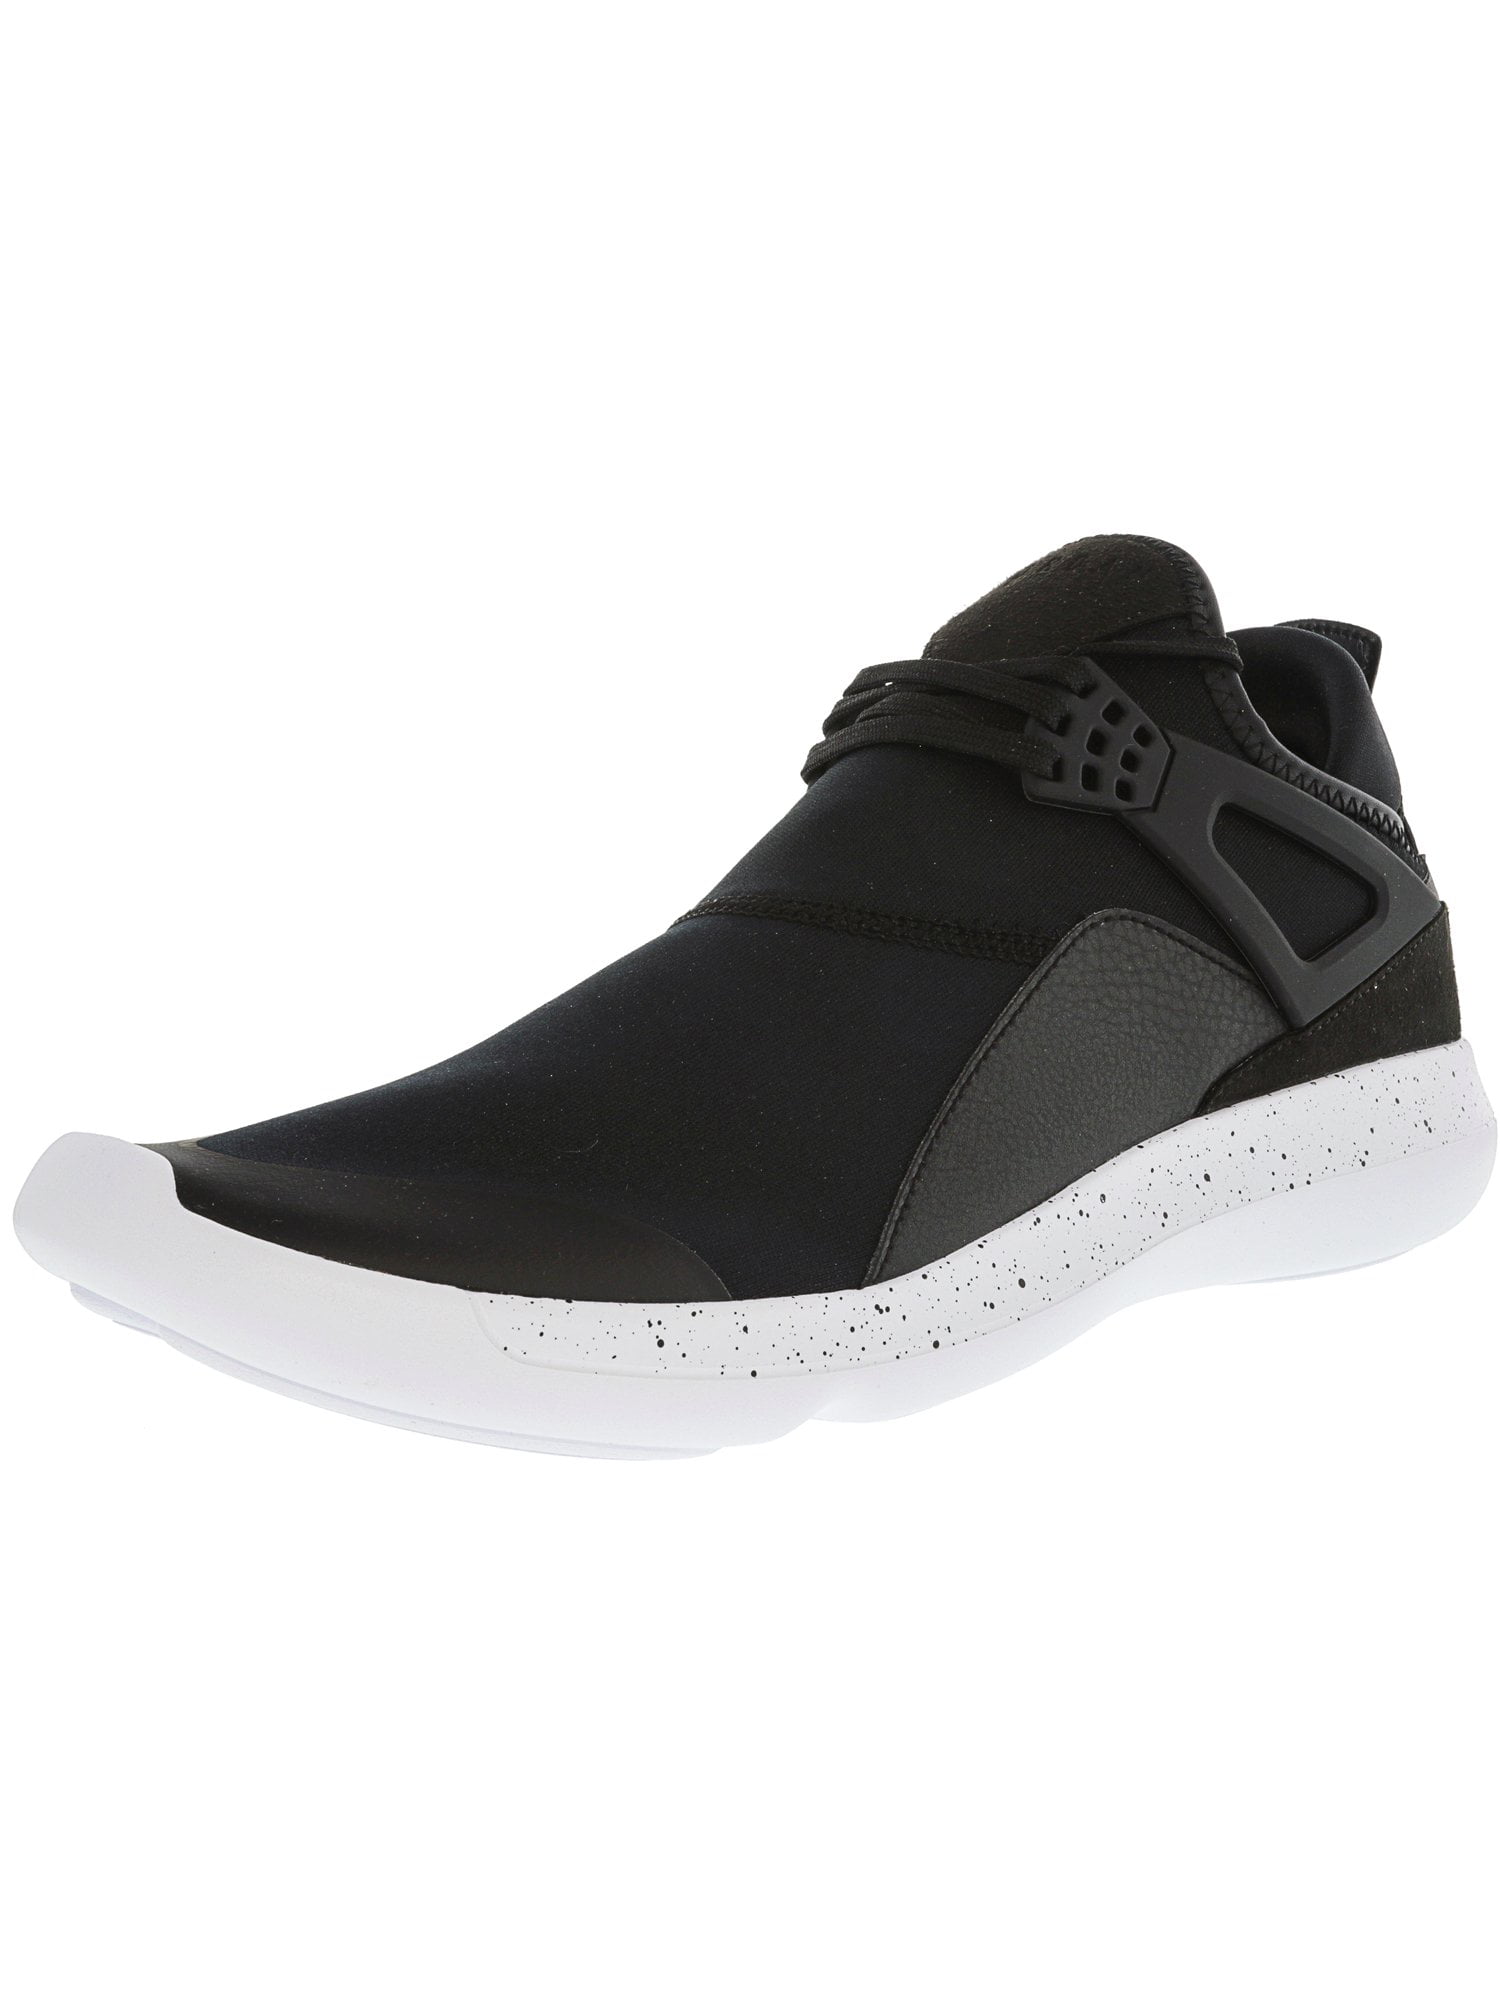 Nike Men's Jordan Fly 89 Black / White Ankle-High Shoe - - Walmart.com